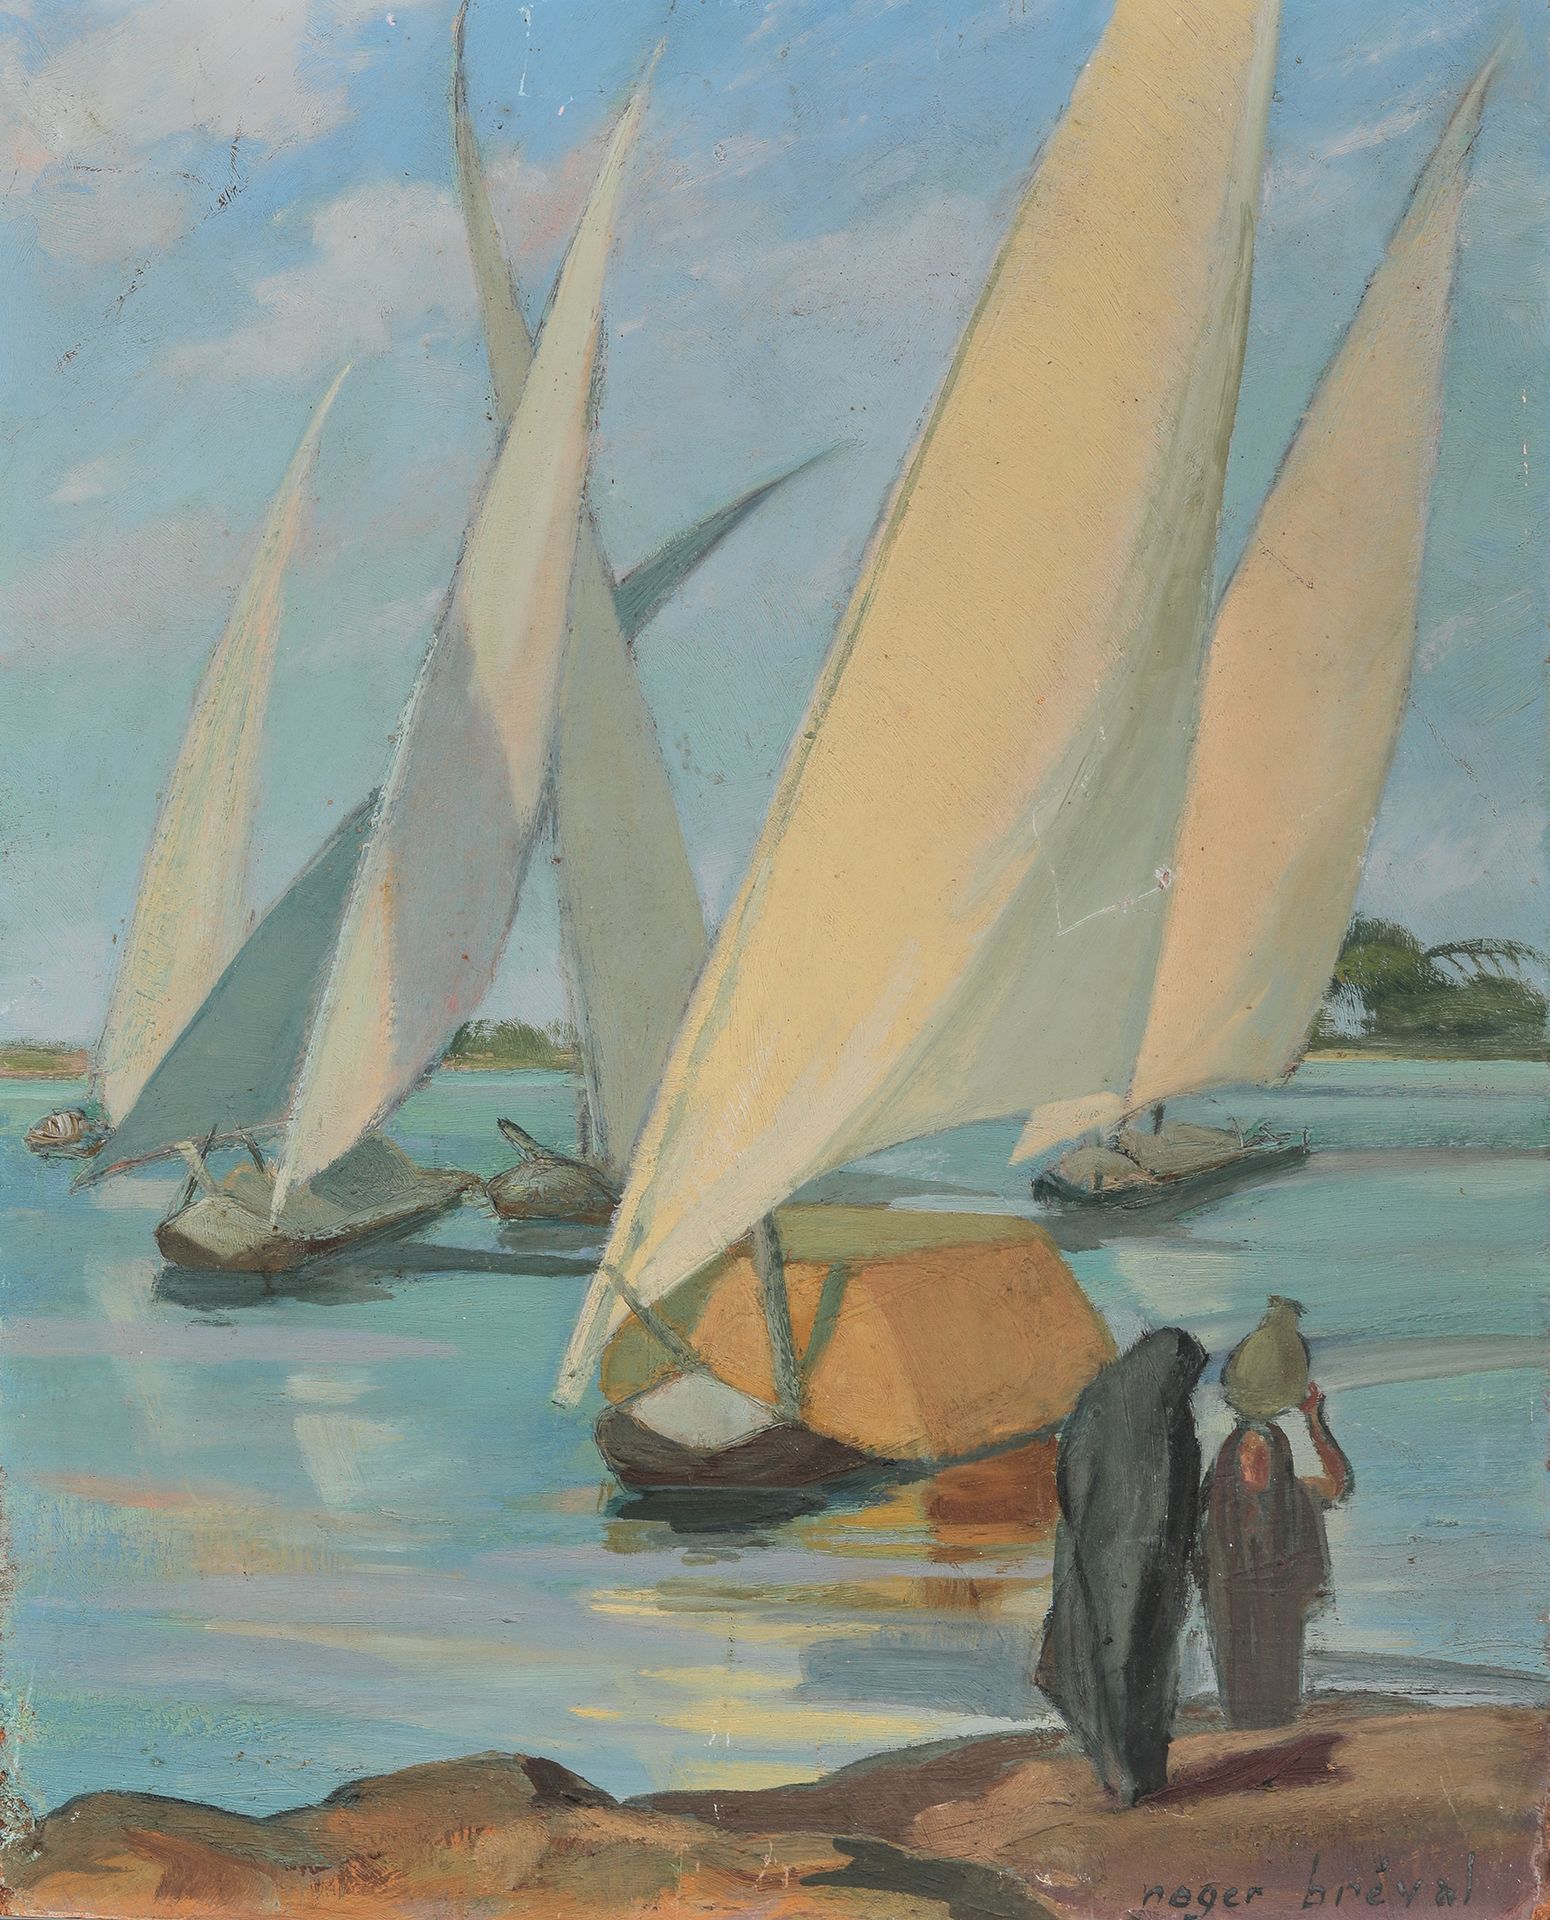 Null 阿尔弗雷德(罗杰)-布雷瓦尔(20岁)

船边的东方妇女

右下角署名 "Isorel "的油画

46 x 38 cm